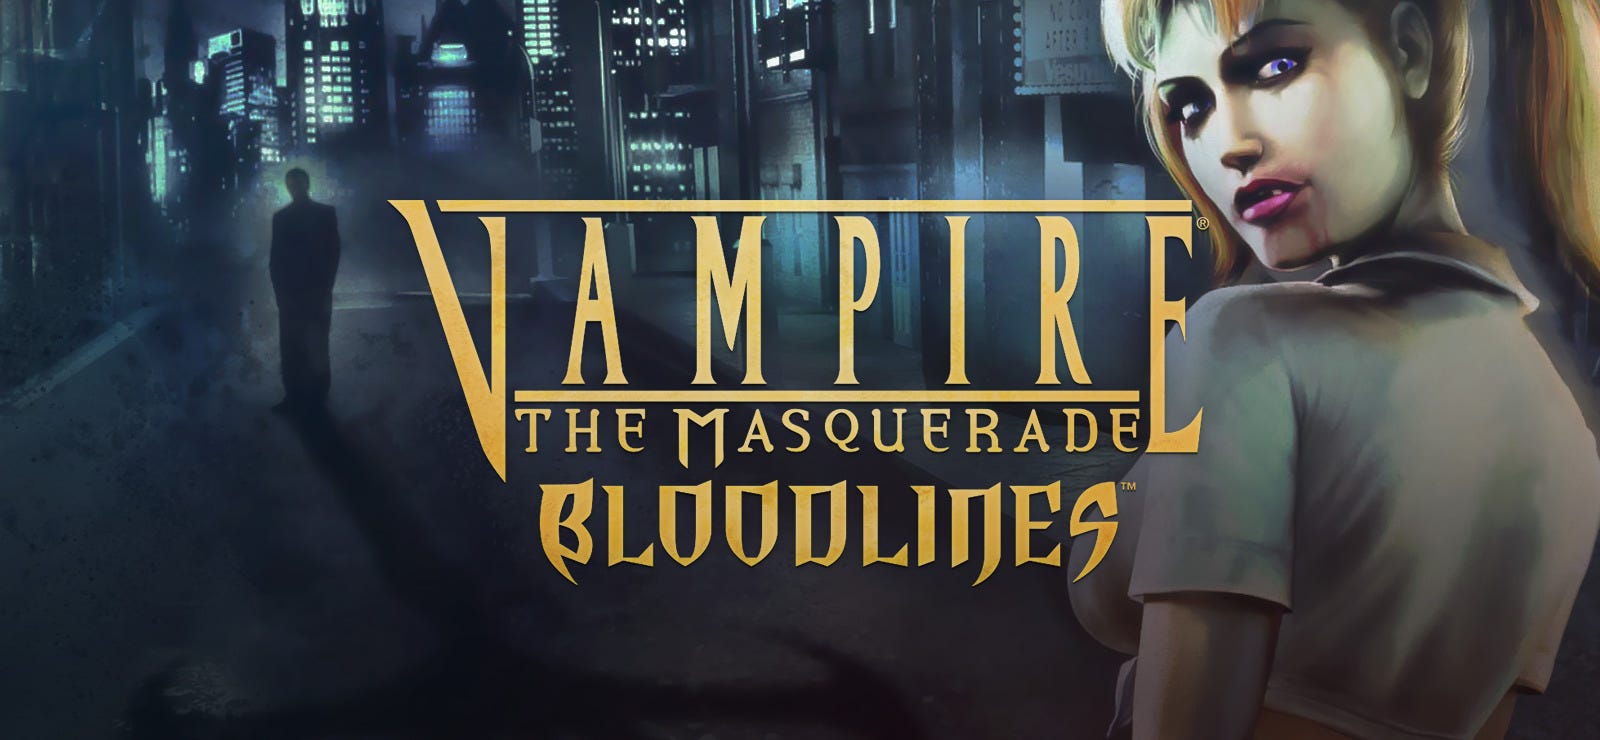 Vampire: The Masquerade - Bloodlines 2 dev talks picking up where